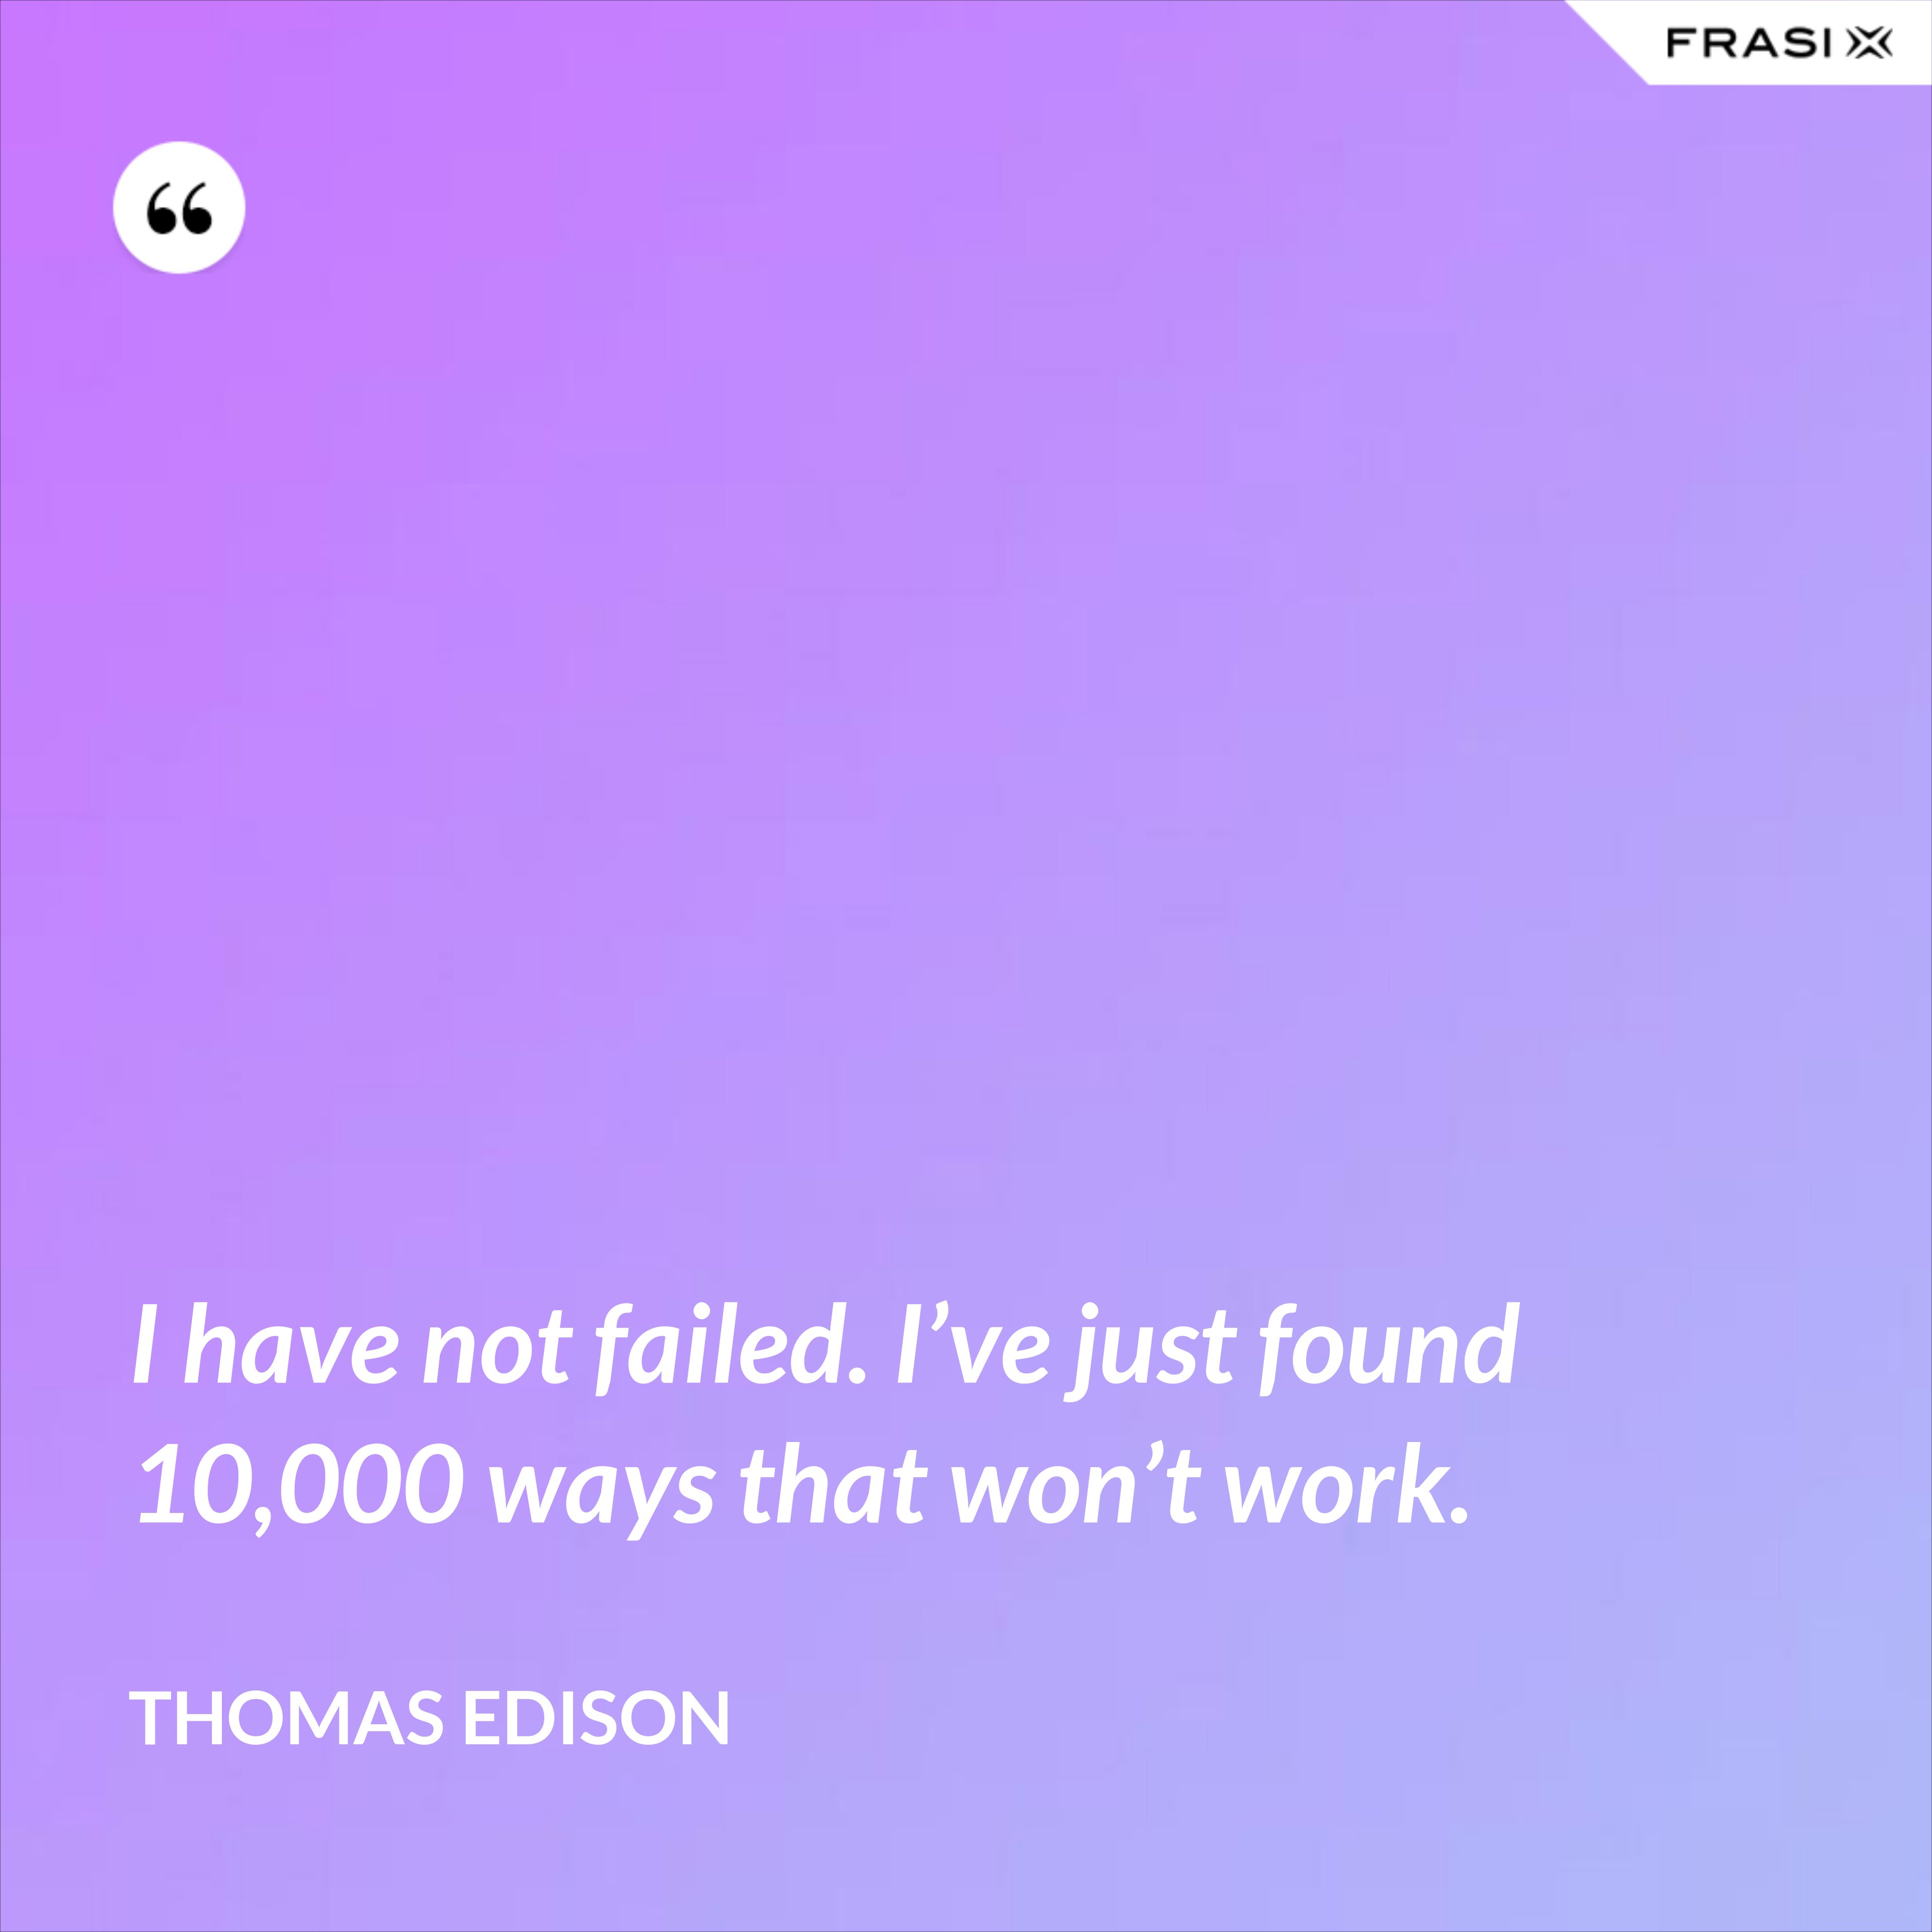 I have not failed. I’ve just found 10,000 ways that won’t work. - Thomas Edison